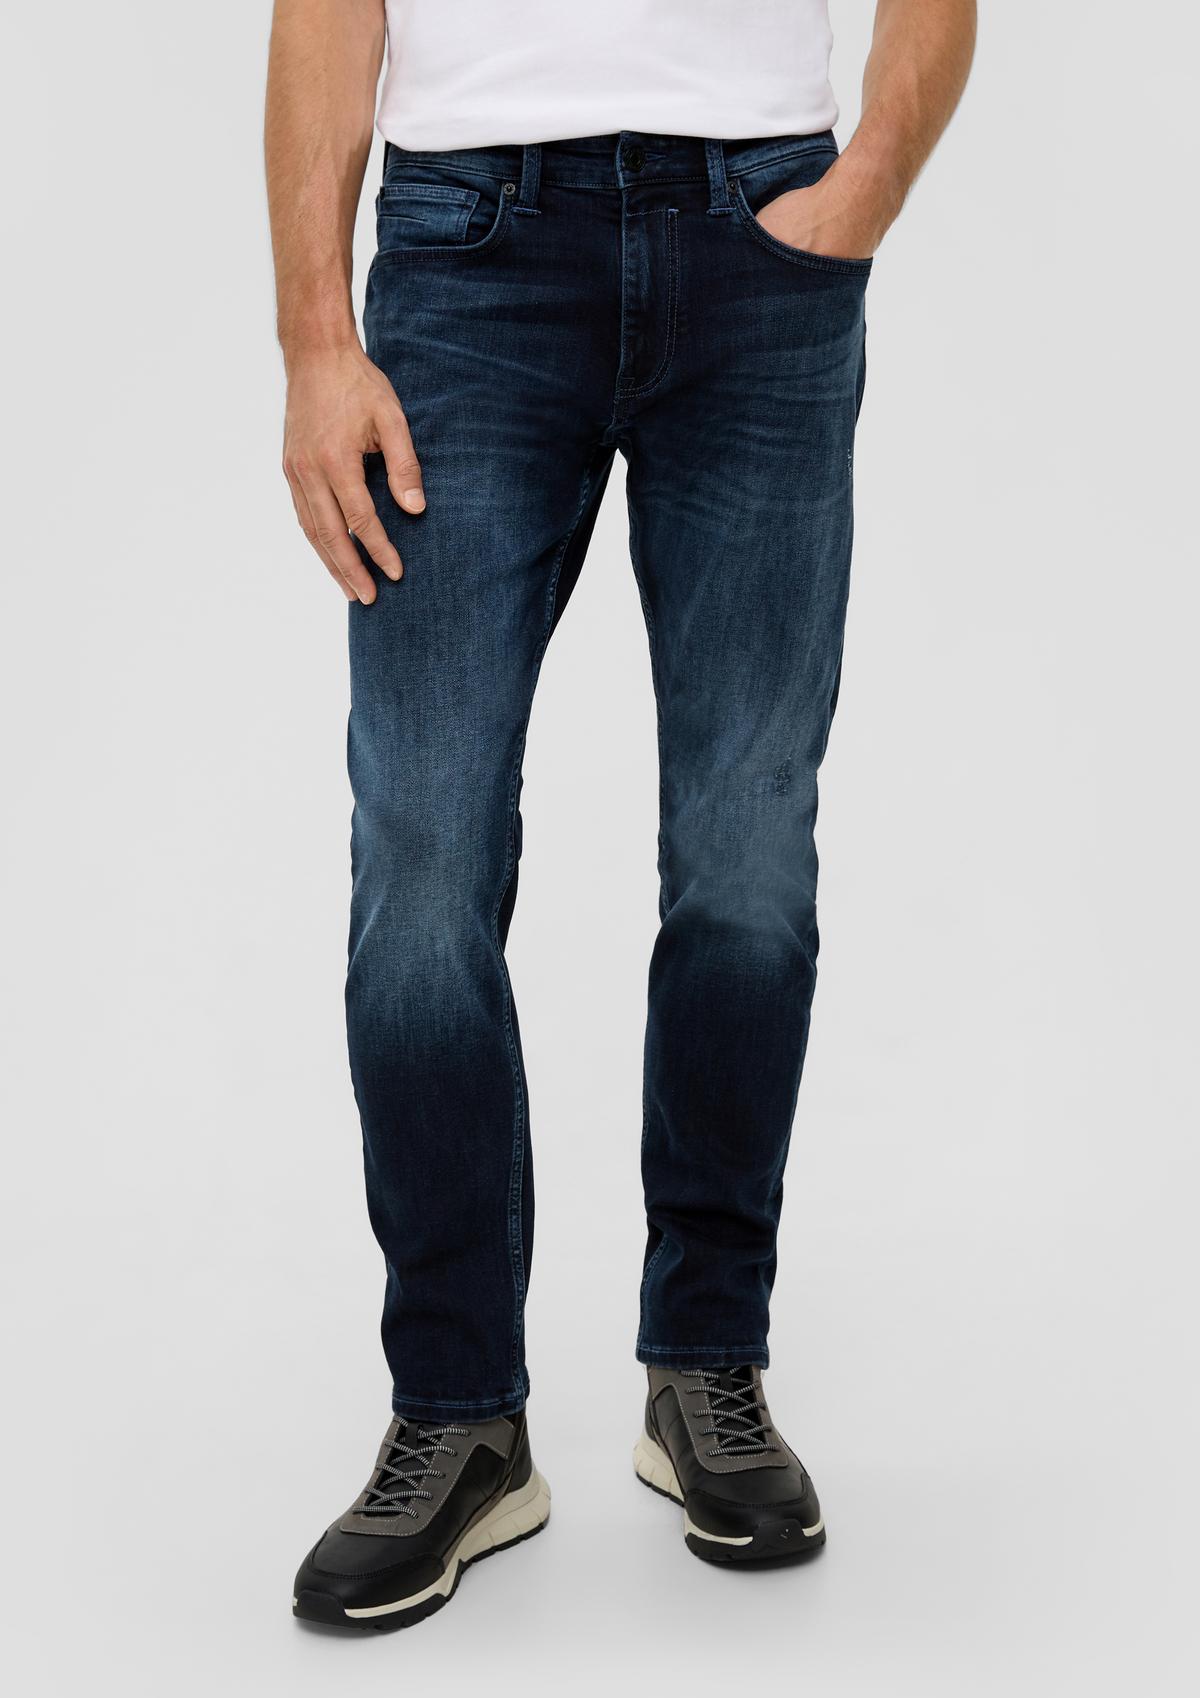 s.Oliver Jeans / Regular Fit / Mid Rise / Tapered Leg / 5-Pocket Style